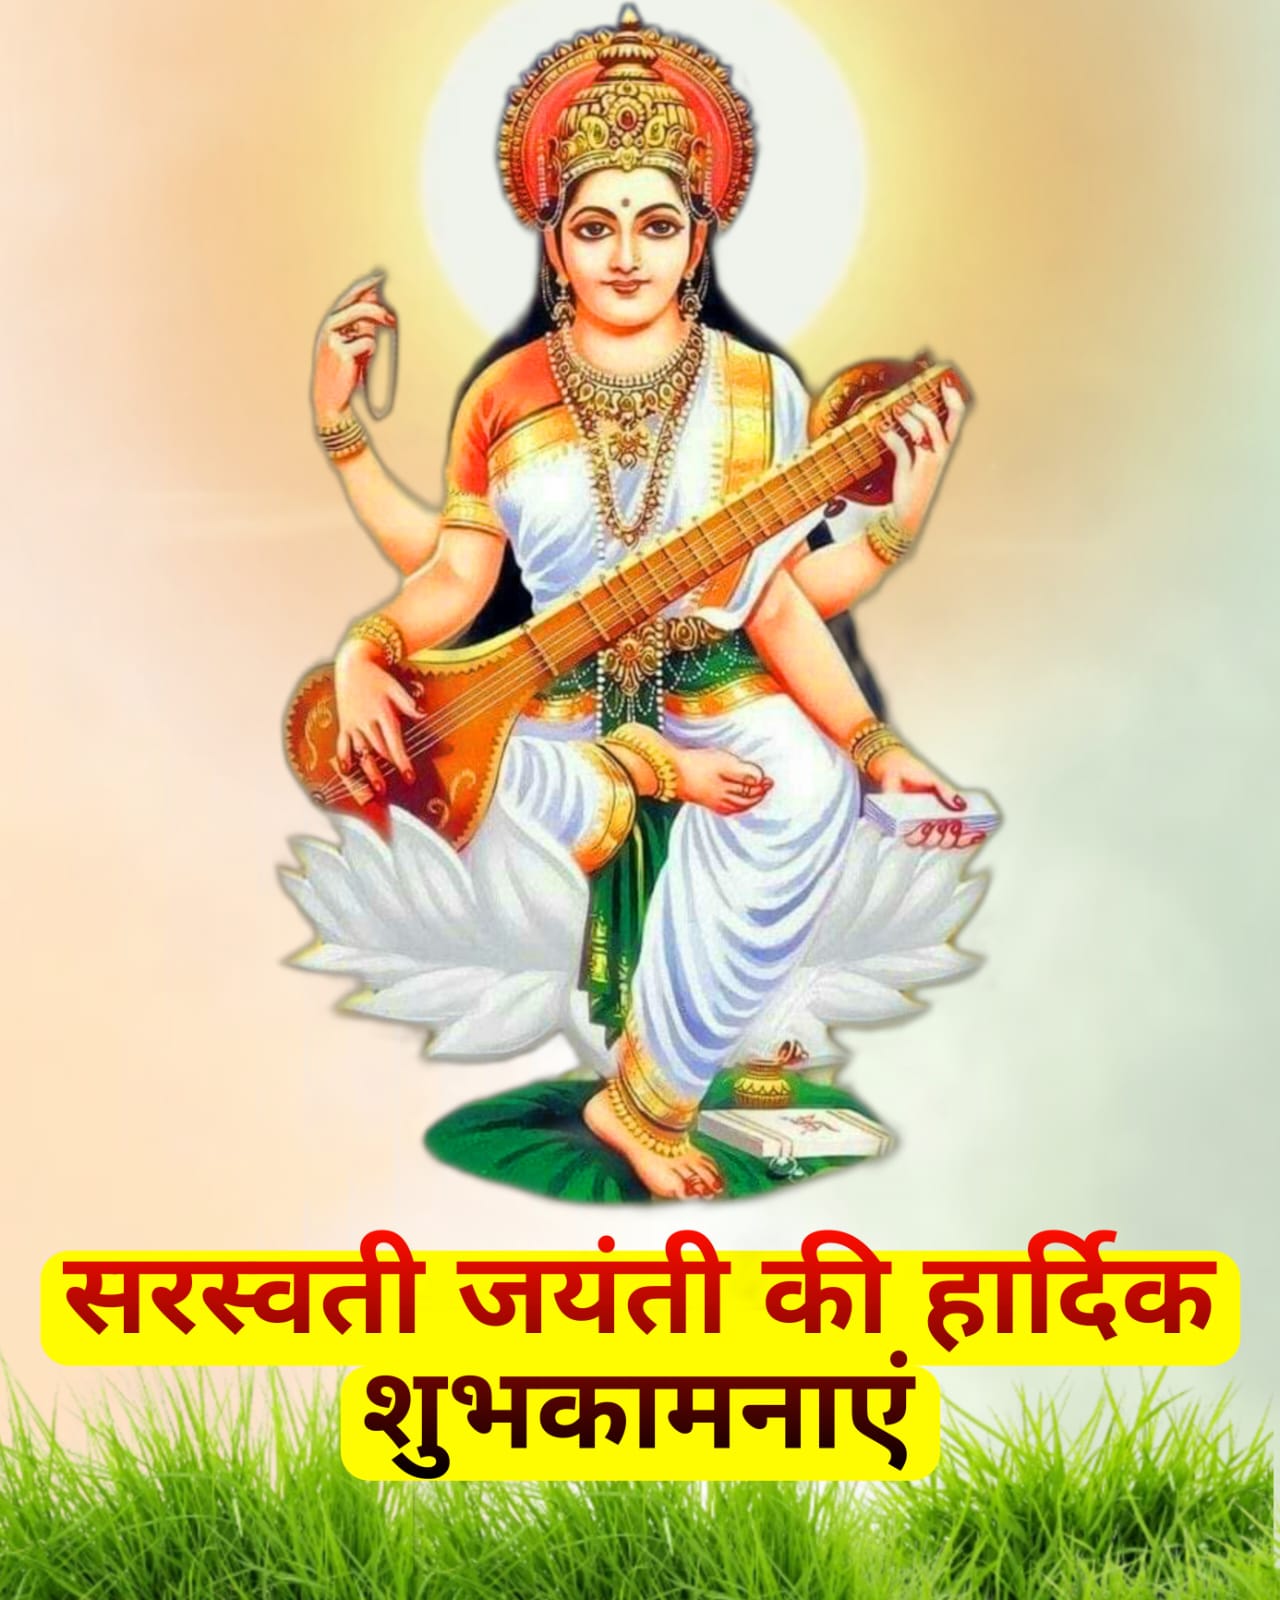 सरस्वती जयंती की हार्दिक शुभकामनाएं | Saraswati Jayanti ki hardik shubhkamnayen images